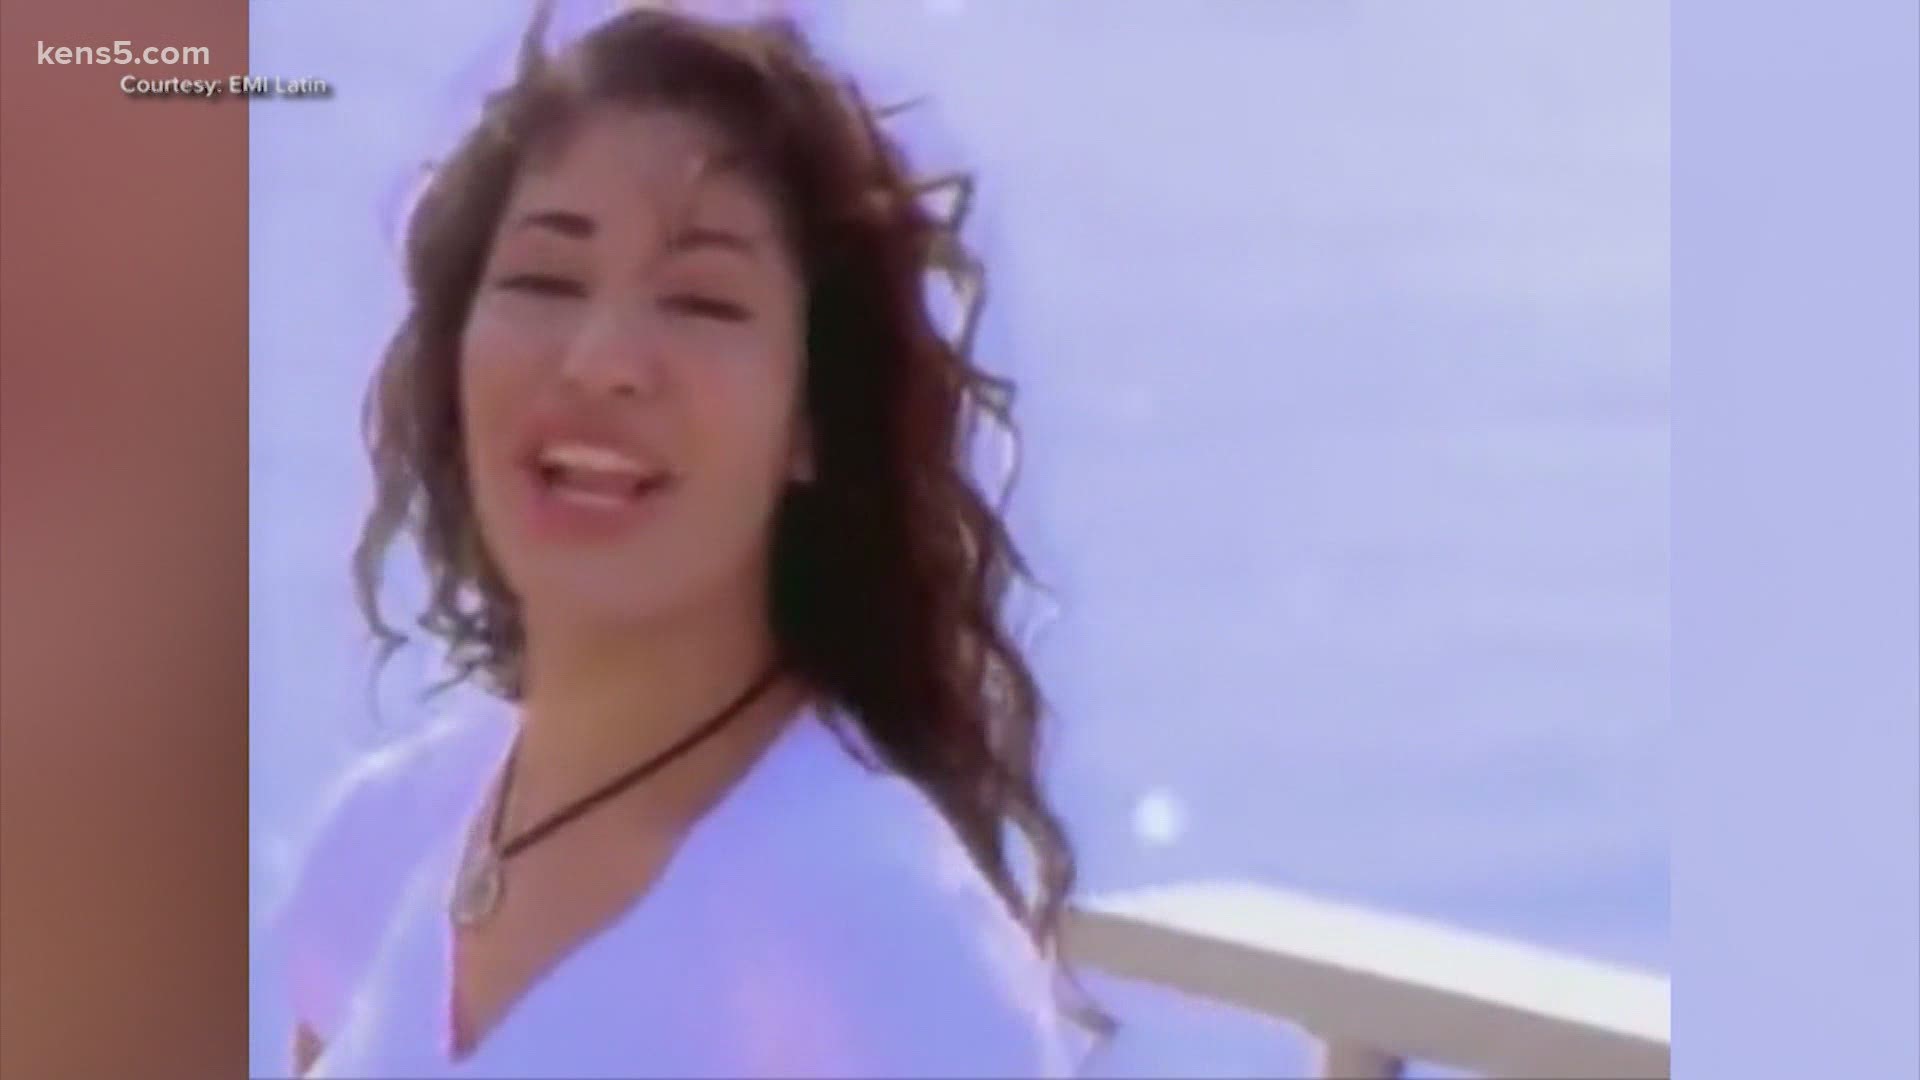 Selena was shot in 1995 in Corpus Christi by the president of her fan club, Yolanda Saldivar.